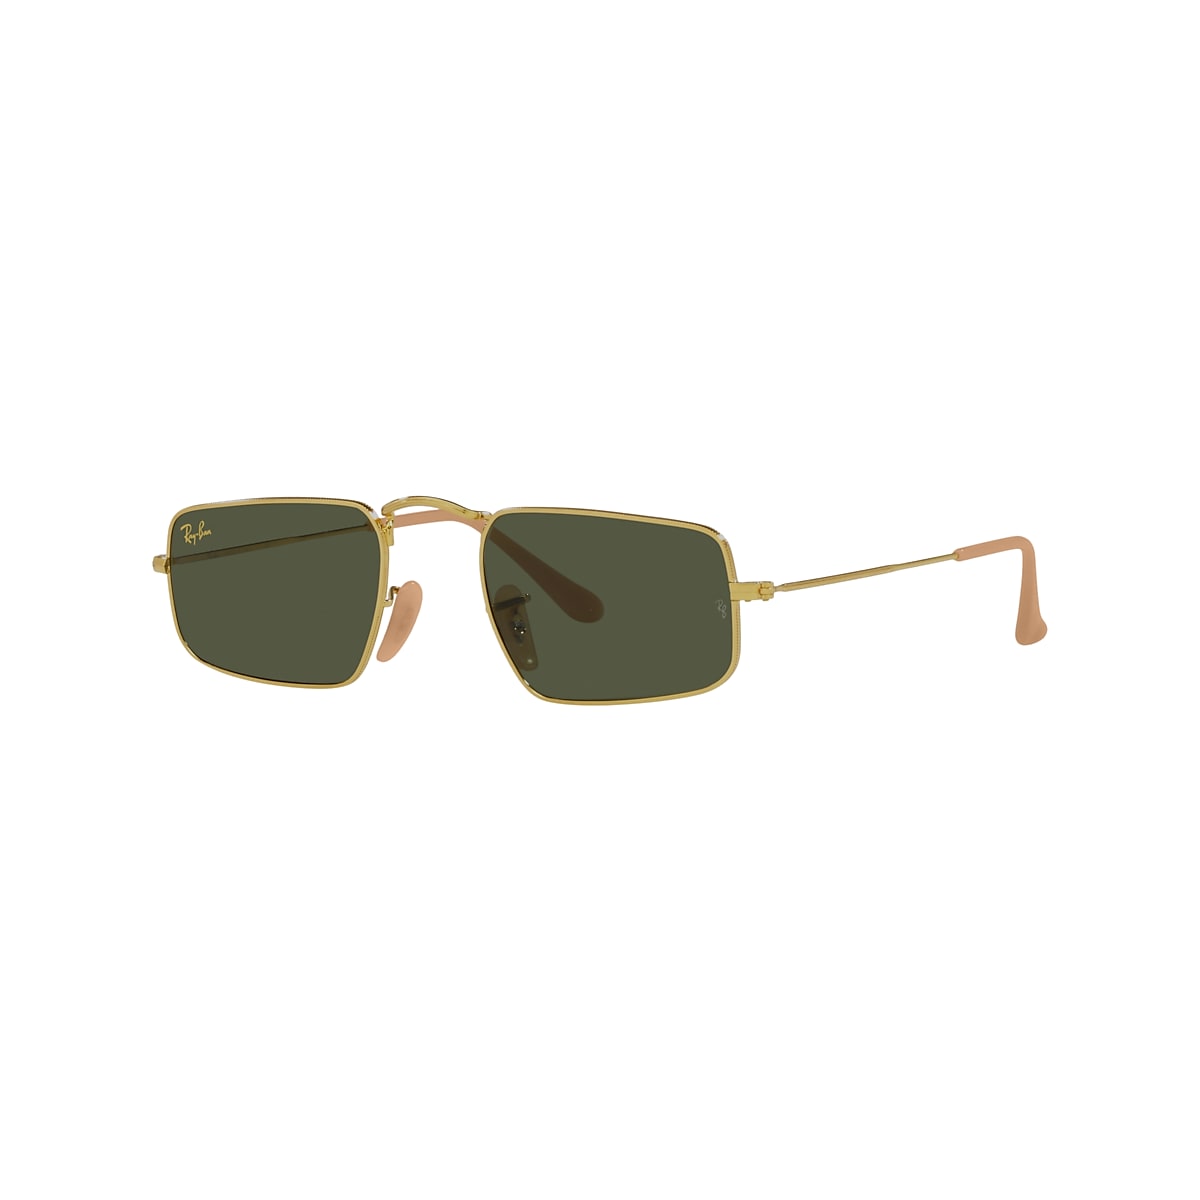 RAY-BAN RB3957 Gold - Unisex Sunglasses, Green Lens